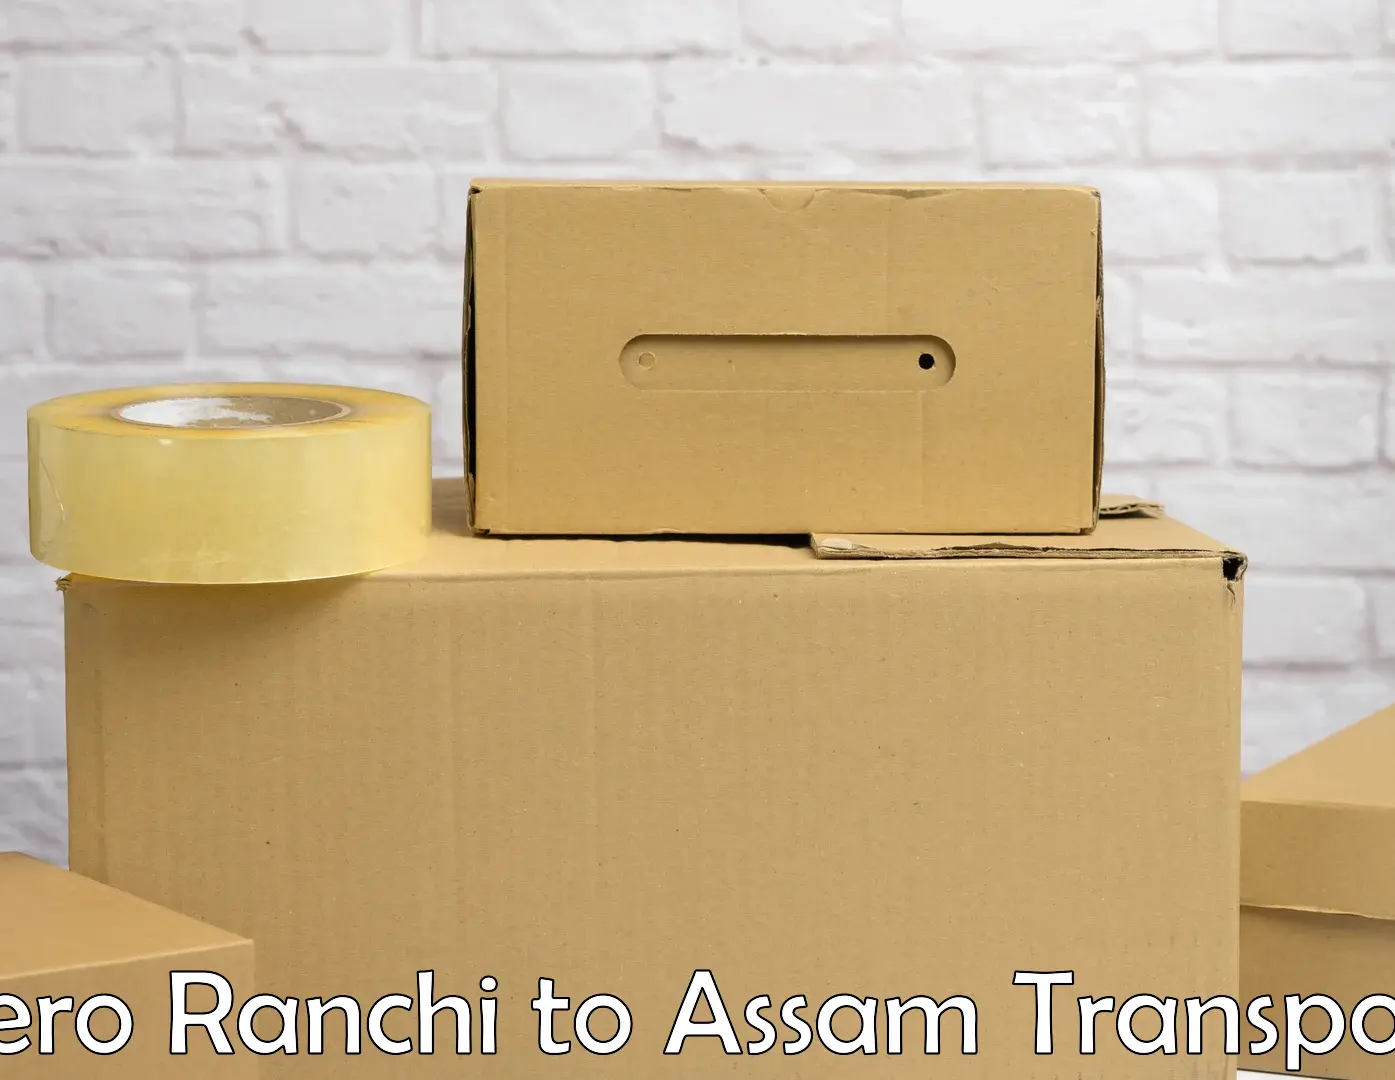 Transport services Bero Ranchi to Assam